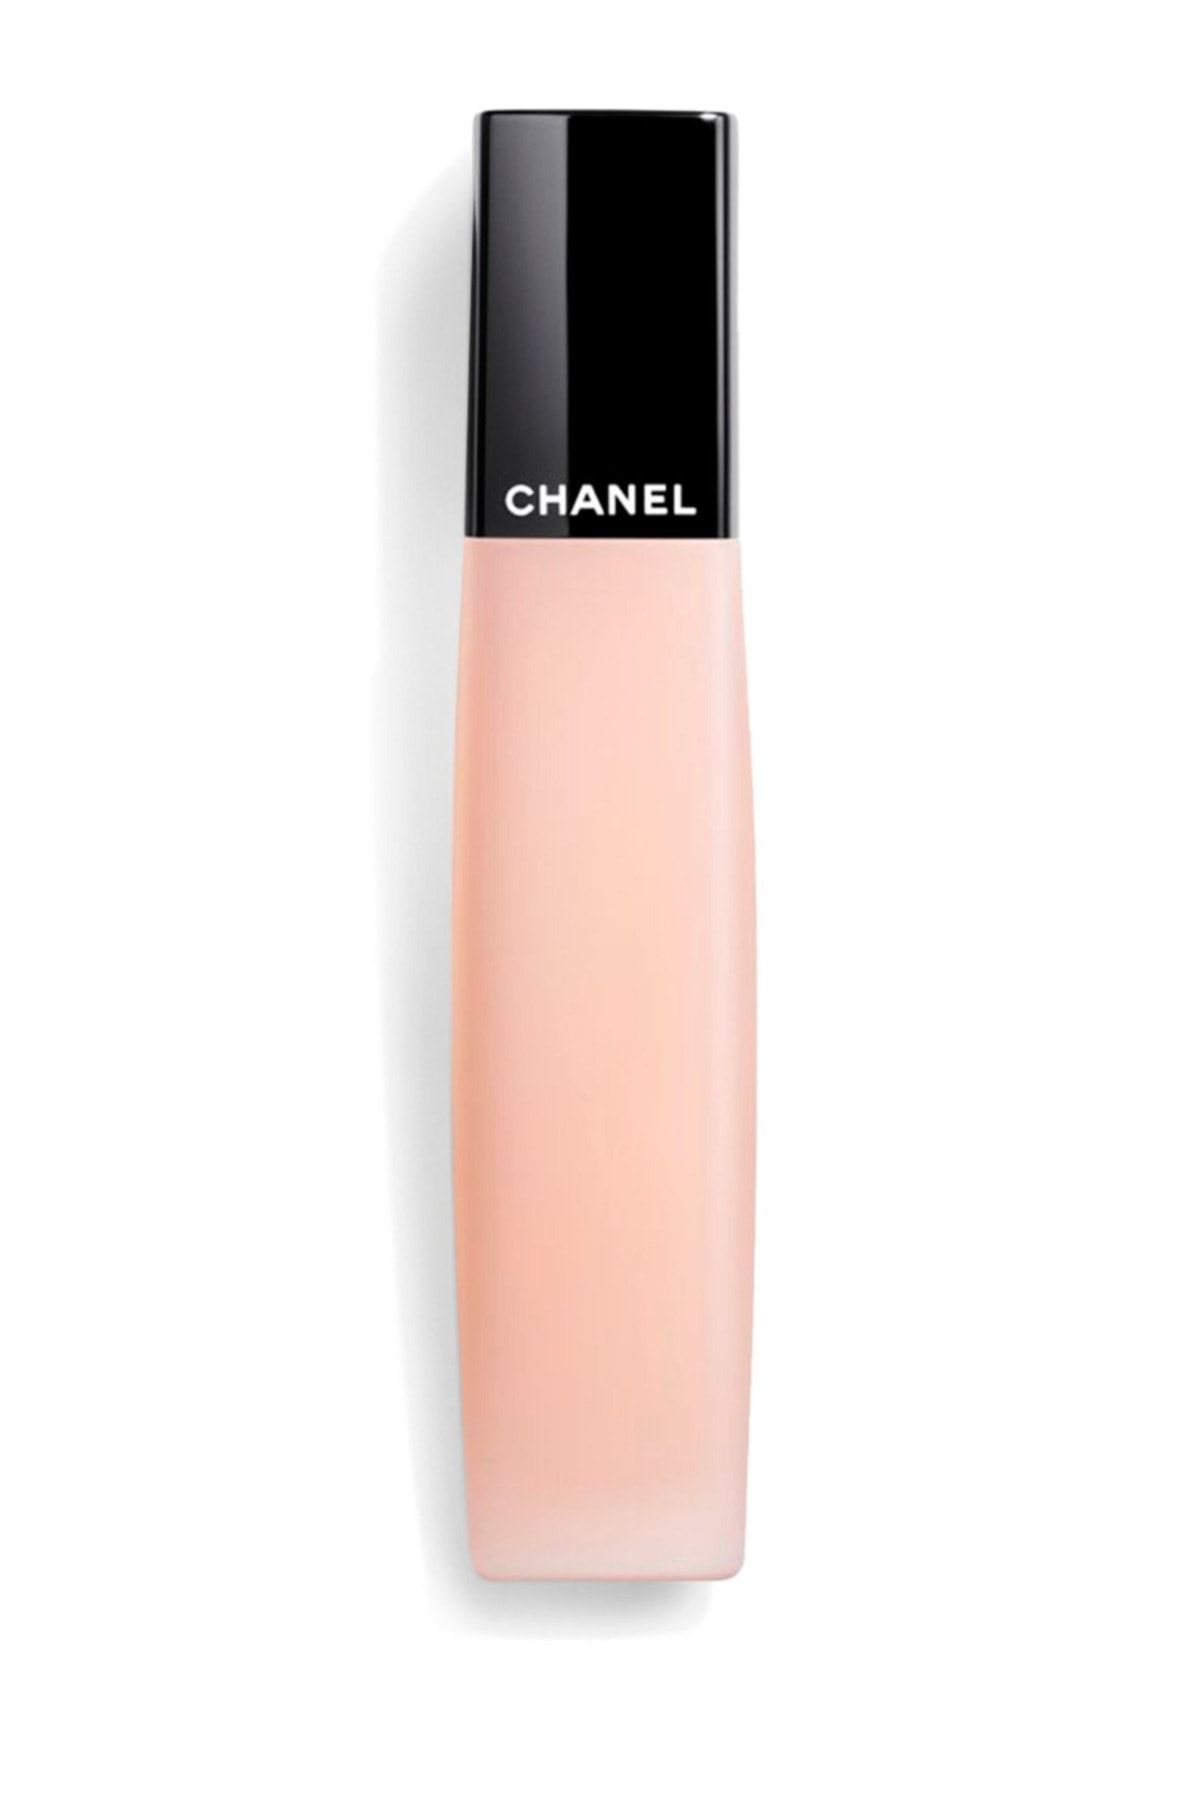 Chanel روغن مرطوب کننده و تقویت کننده ناخن L'Huile حاوی کاملیا 11 میل